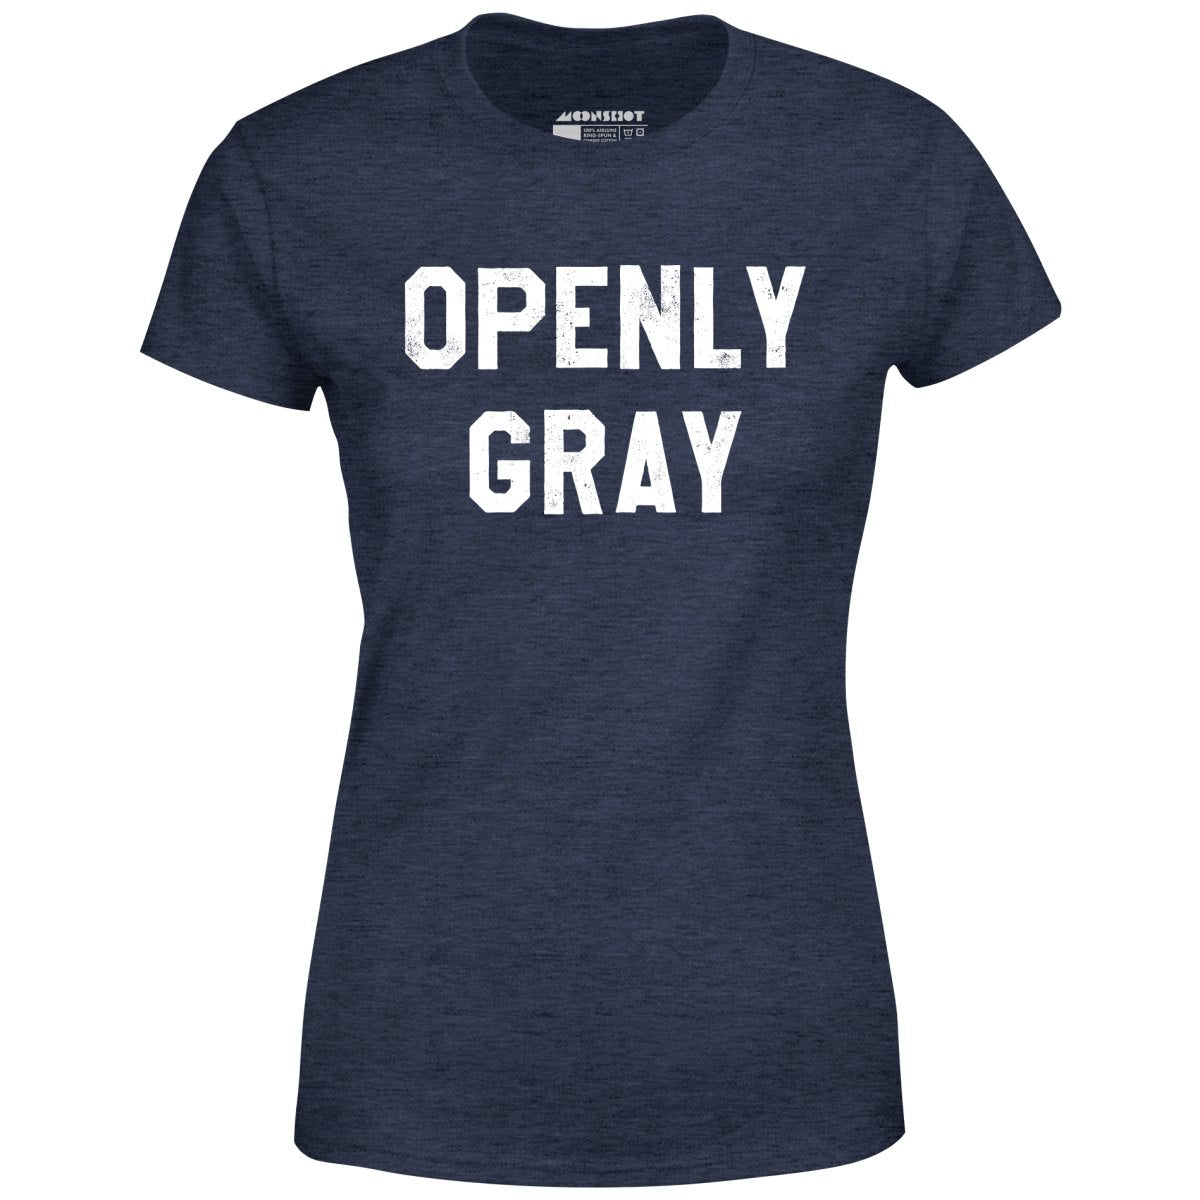 Openly Gray - Women's T-Shirt